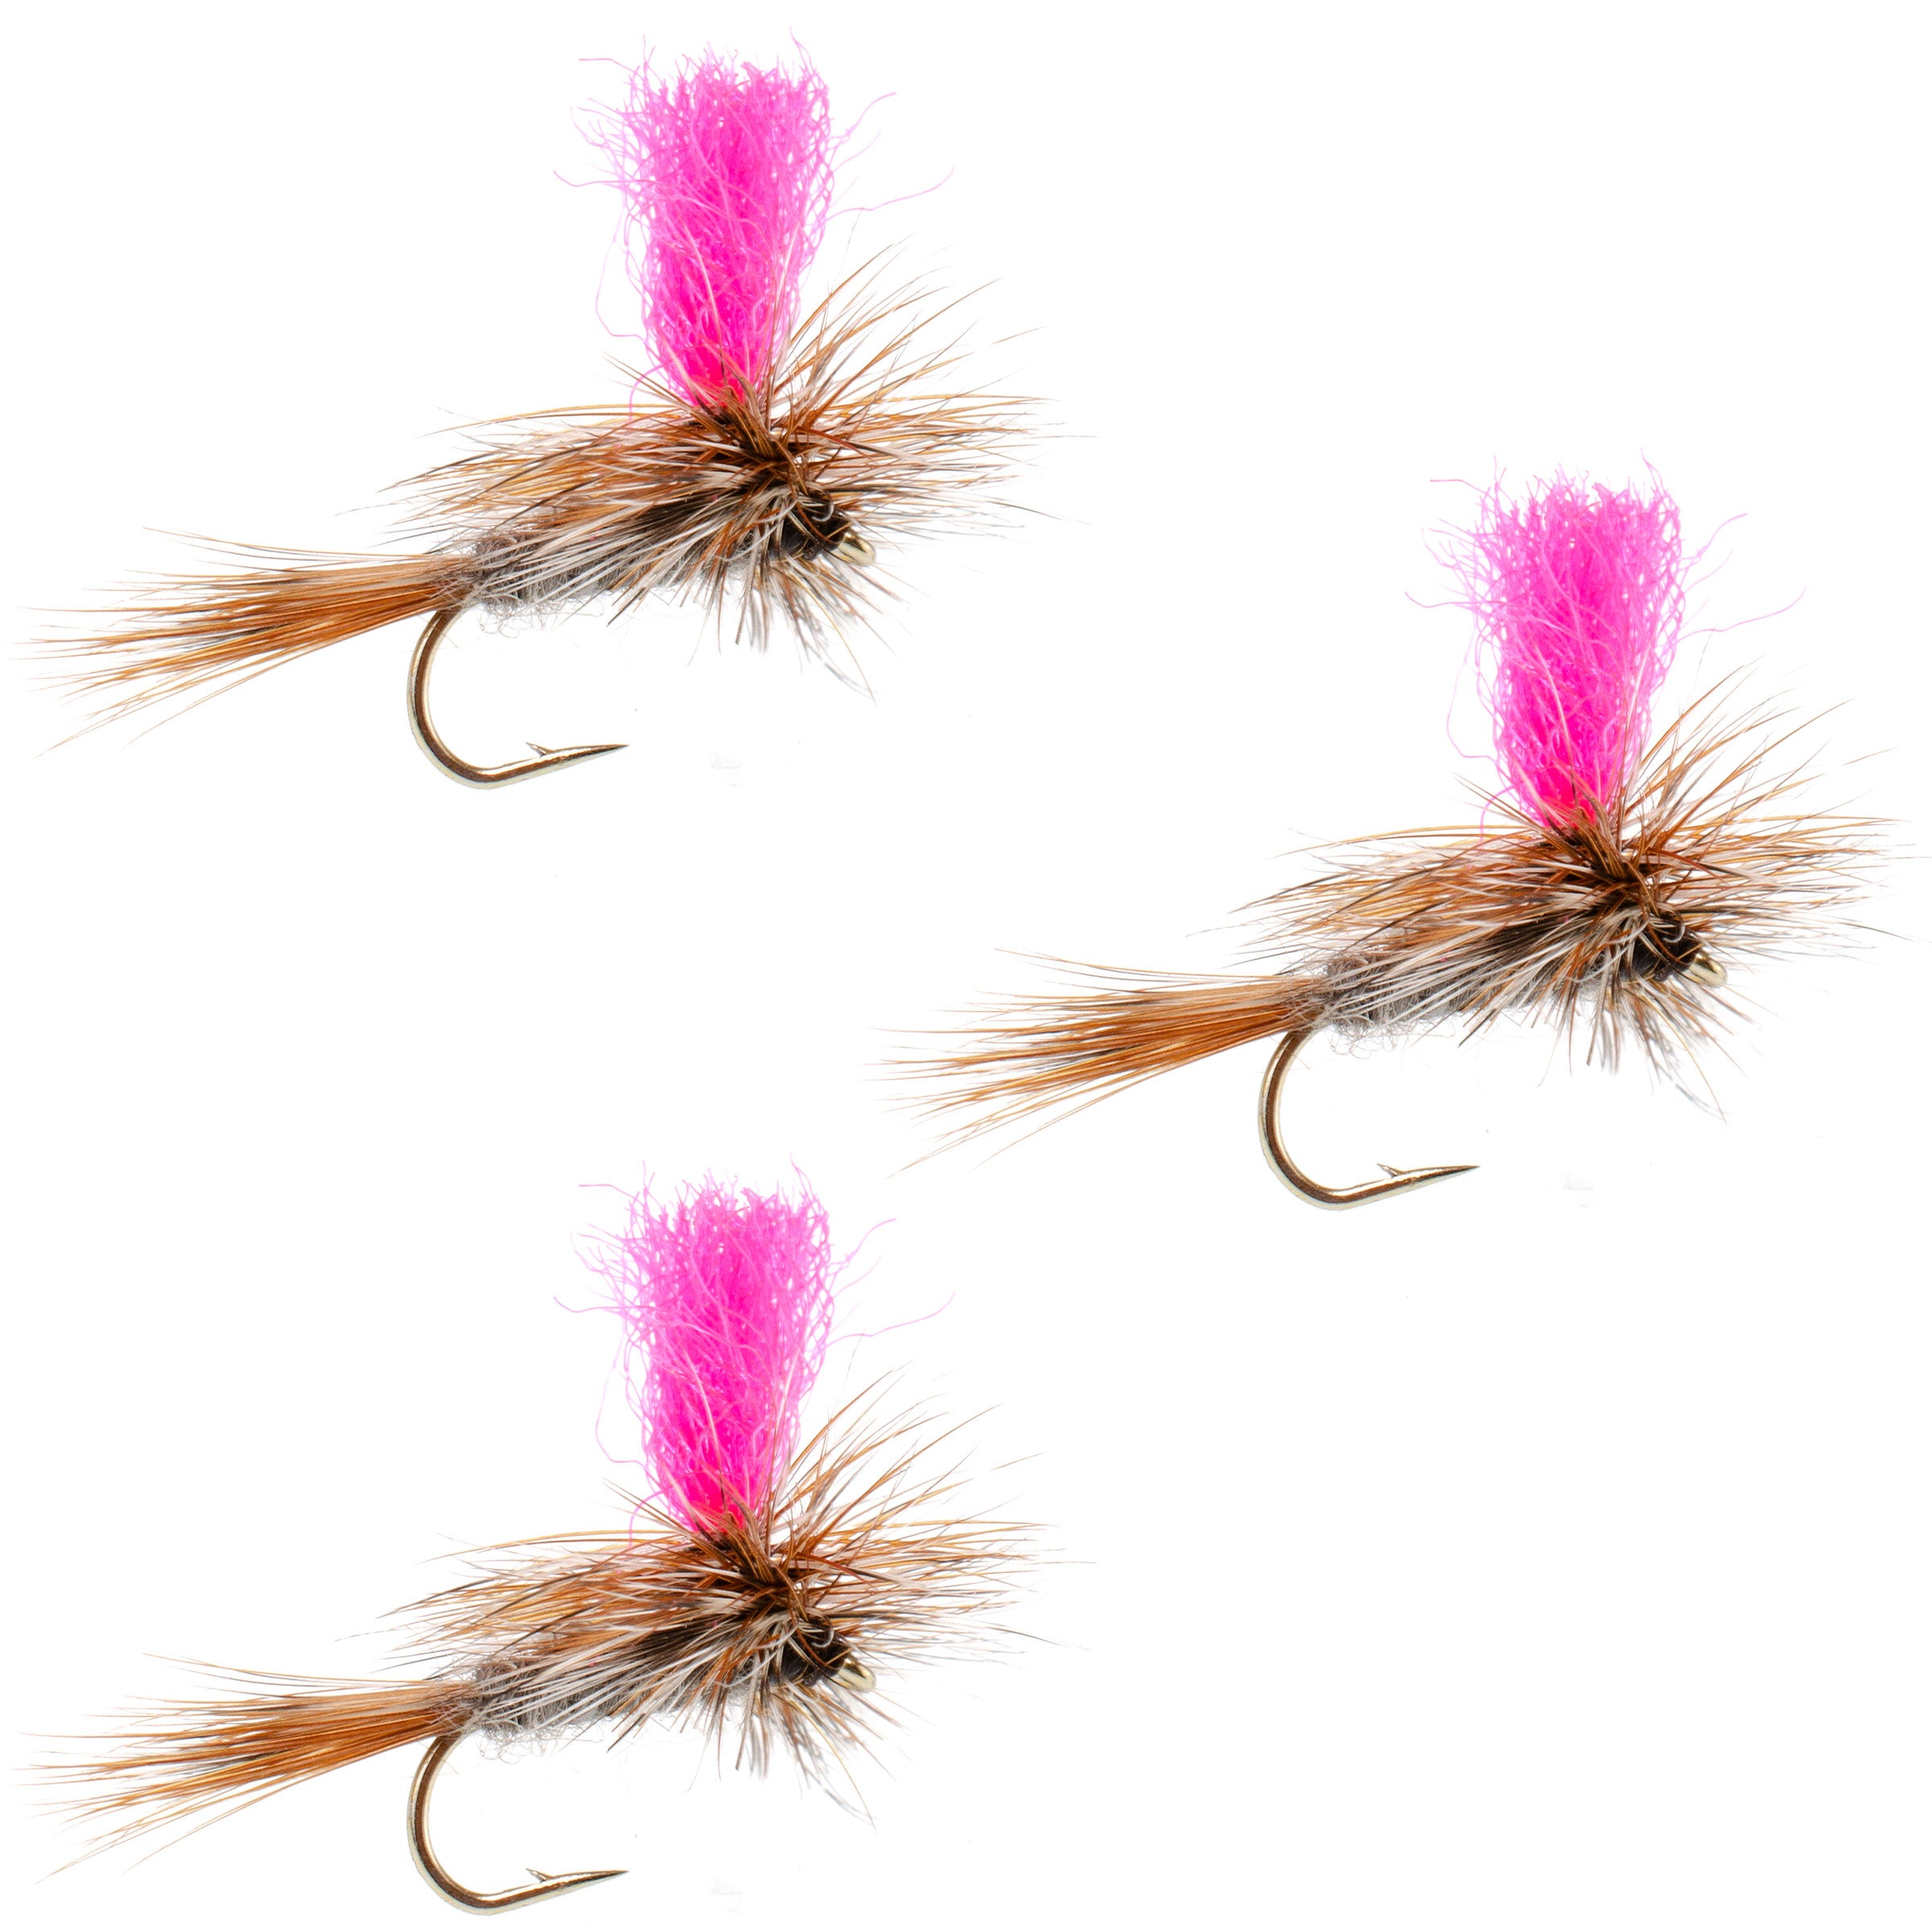 https://cdn.shopify.com/s/files/1/0764/9813/files/3-Adams-Pink-His-Vis-Fly-Fishing-Dry-Flies-Collection.jpg?v=1701545104&width=2400